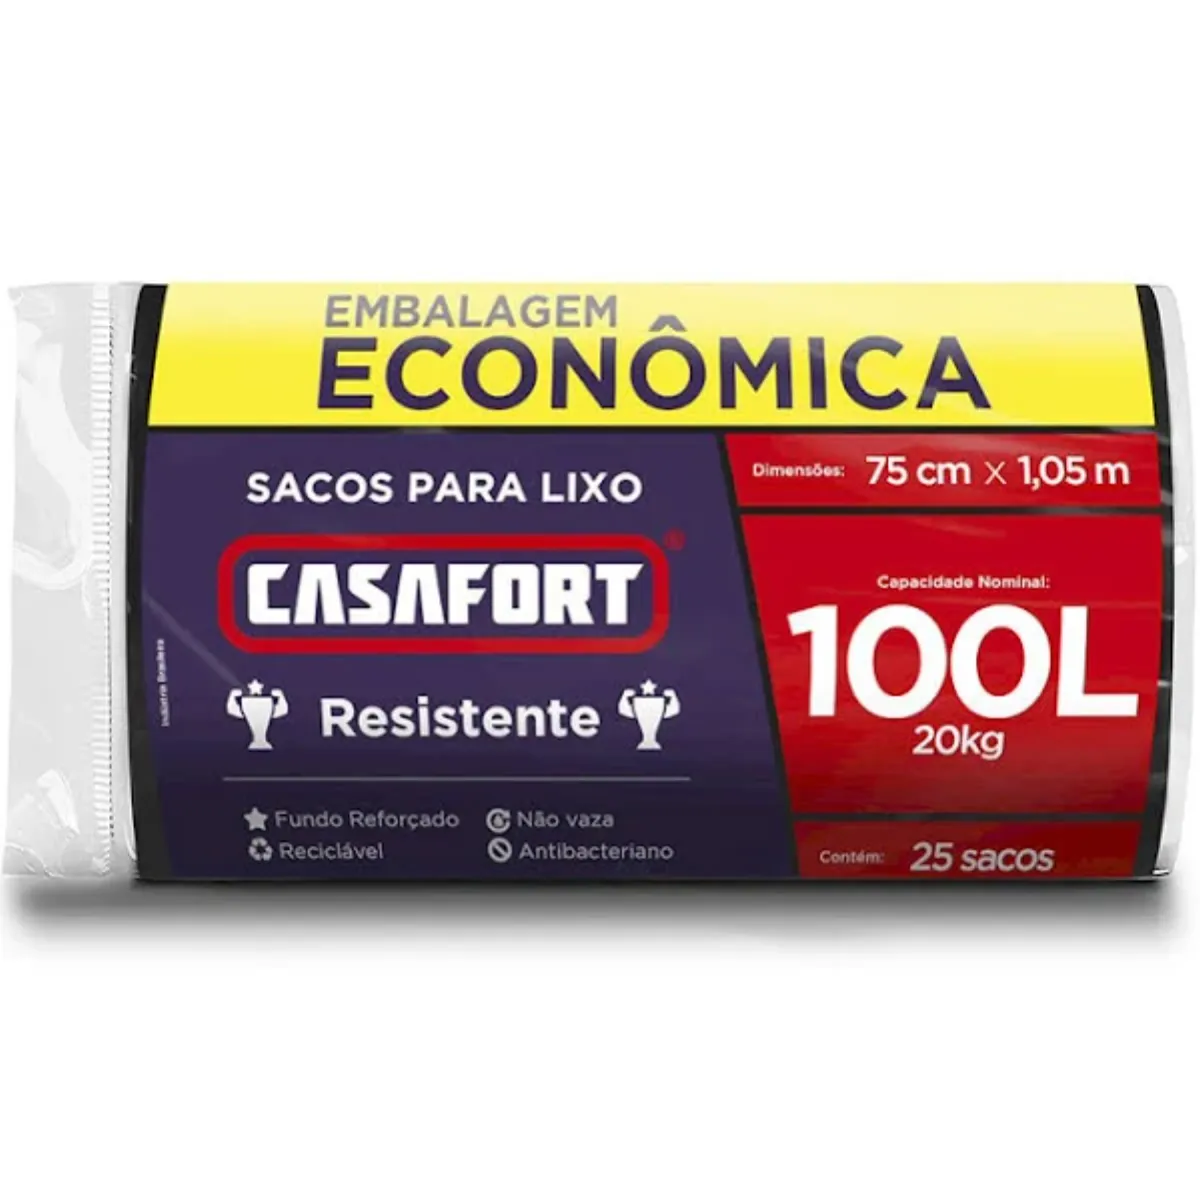 Saco para Lixo Casafort 100L 25 Unidades Embalagem Econômica